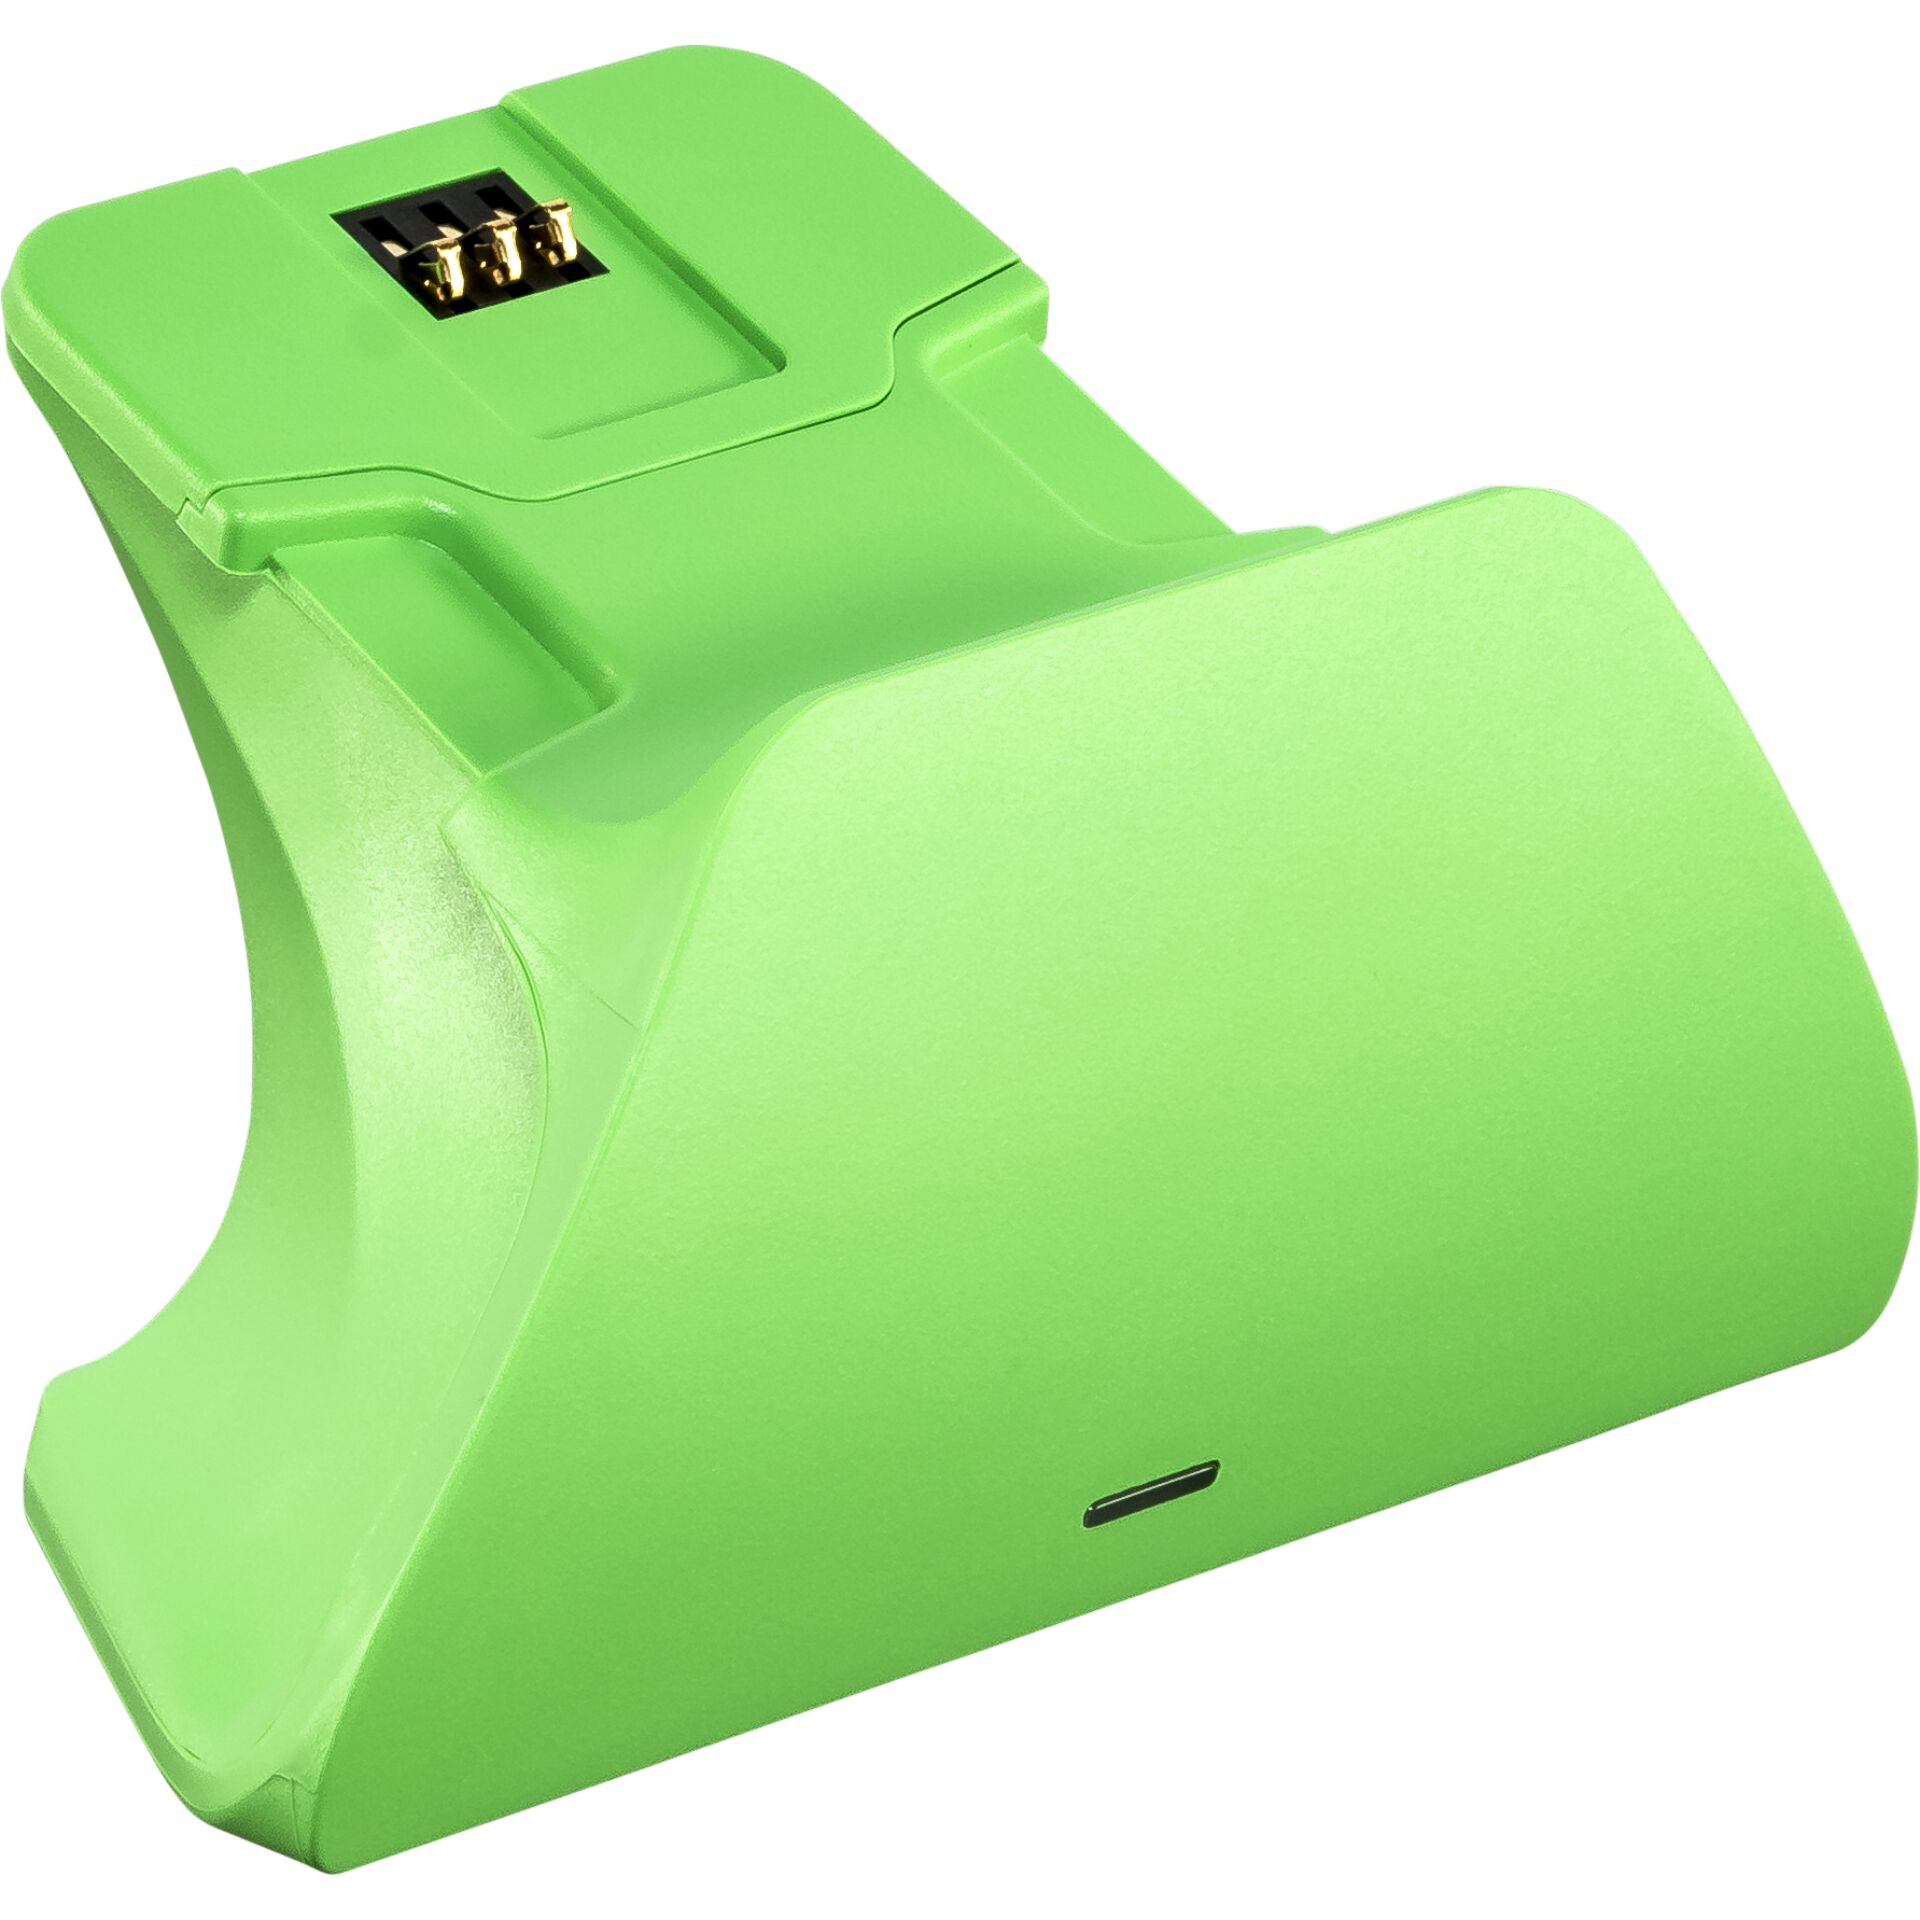 Razer Charging Stand Xbox green